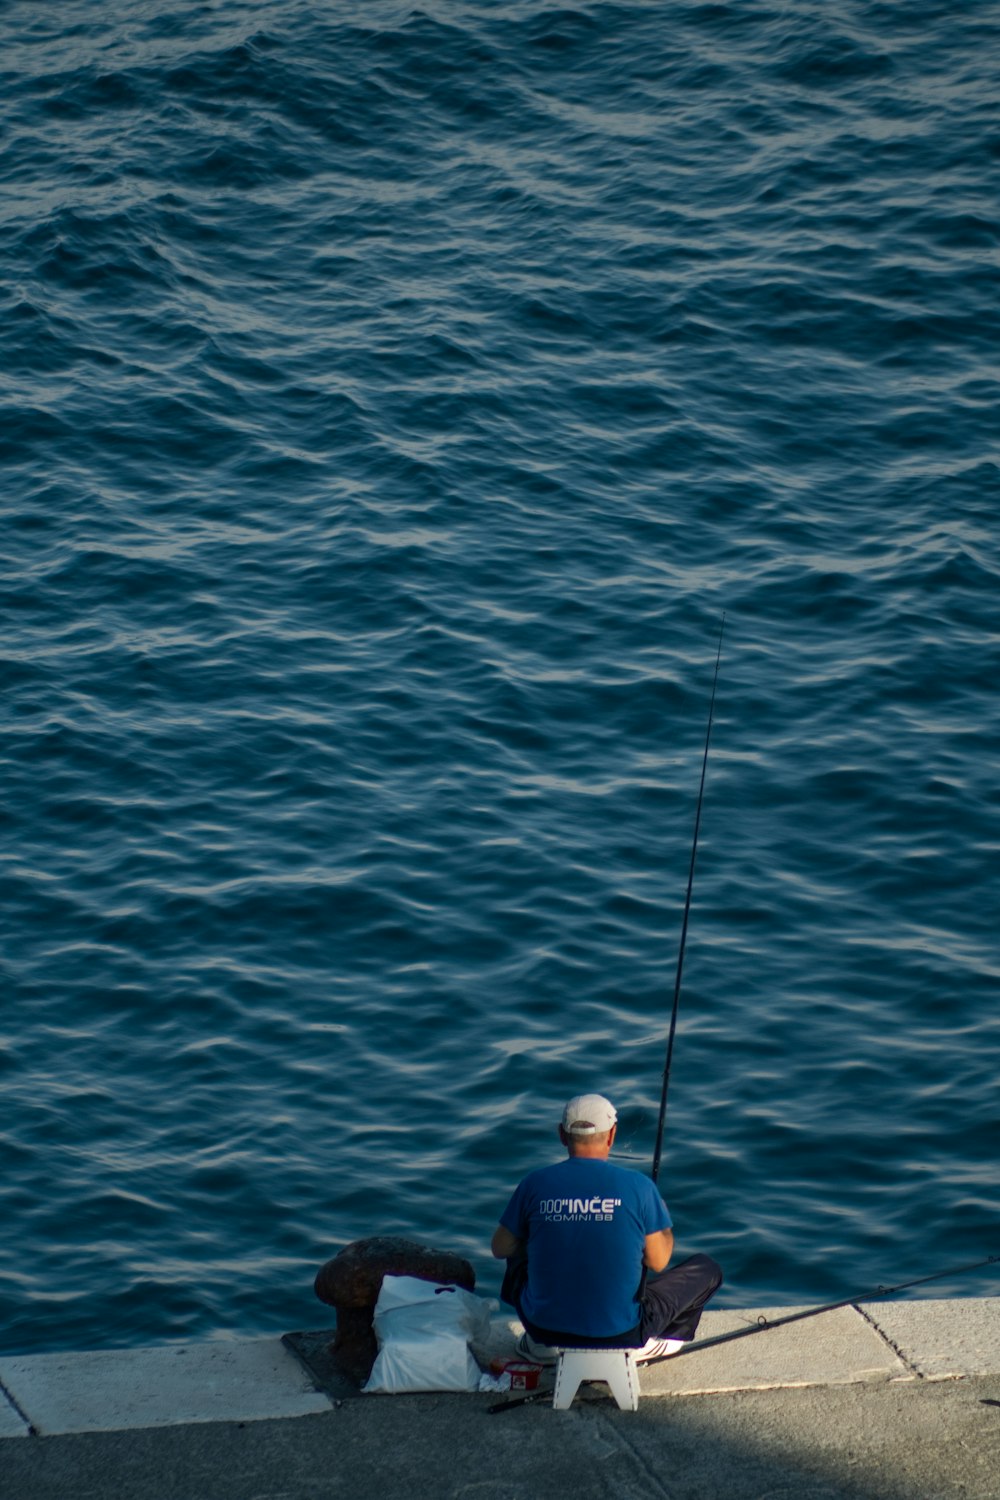 man in blue shirt fishing on blue sea during daytime